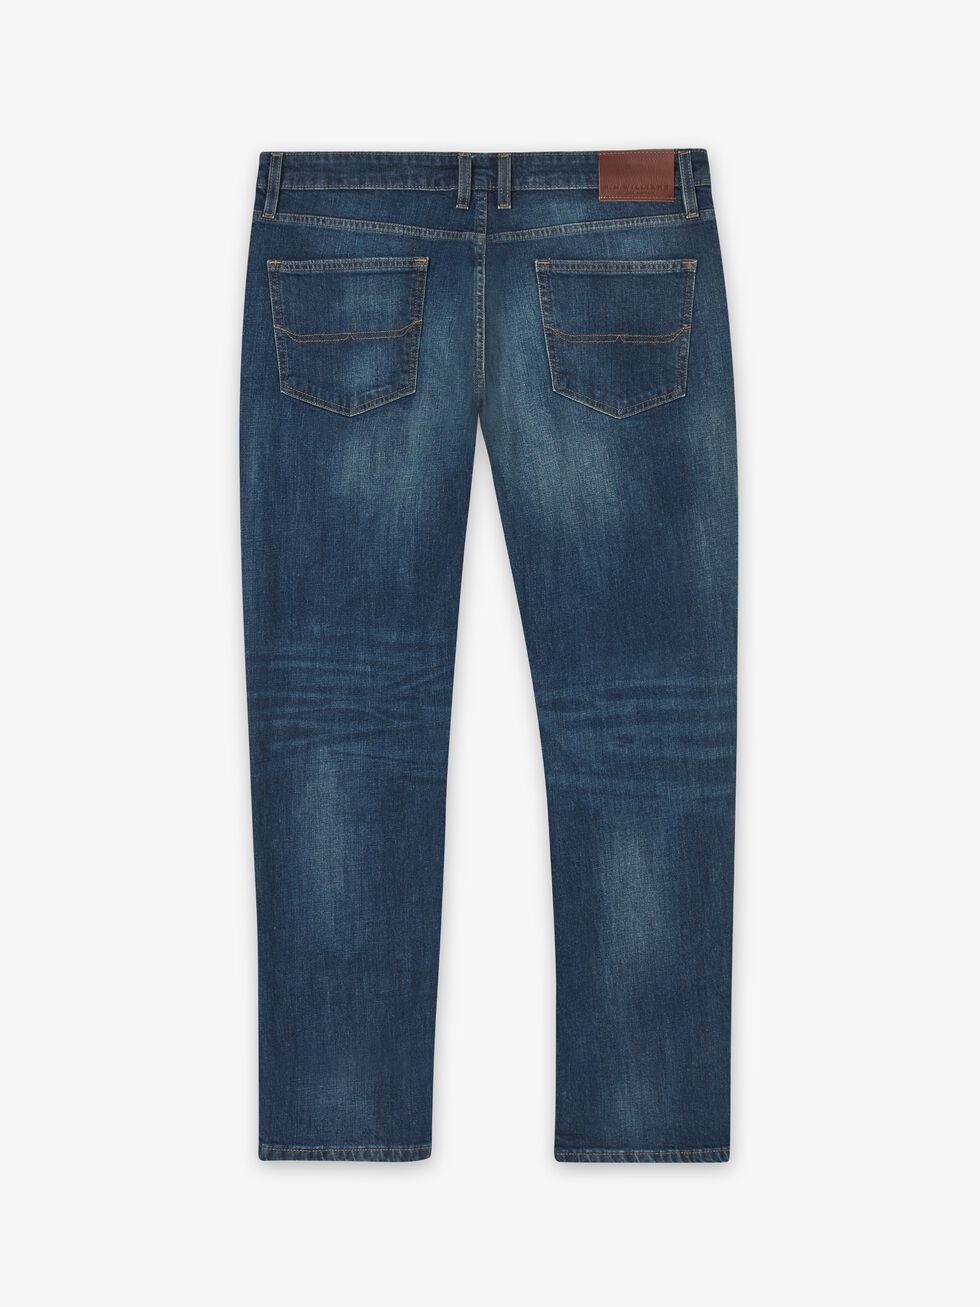 Ramco Denim Jeans - Men's Jeans at R.M.Williams®